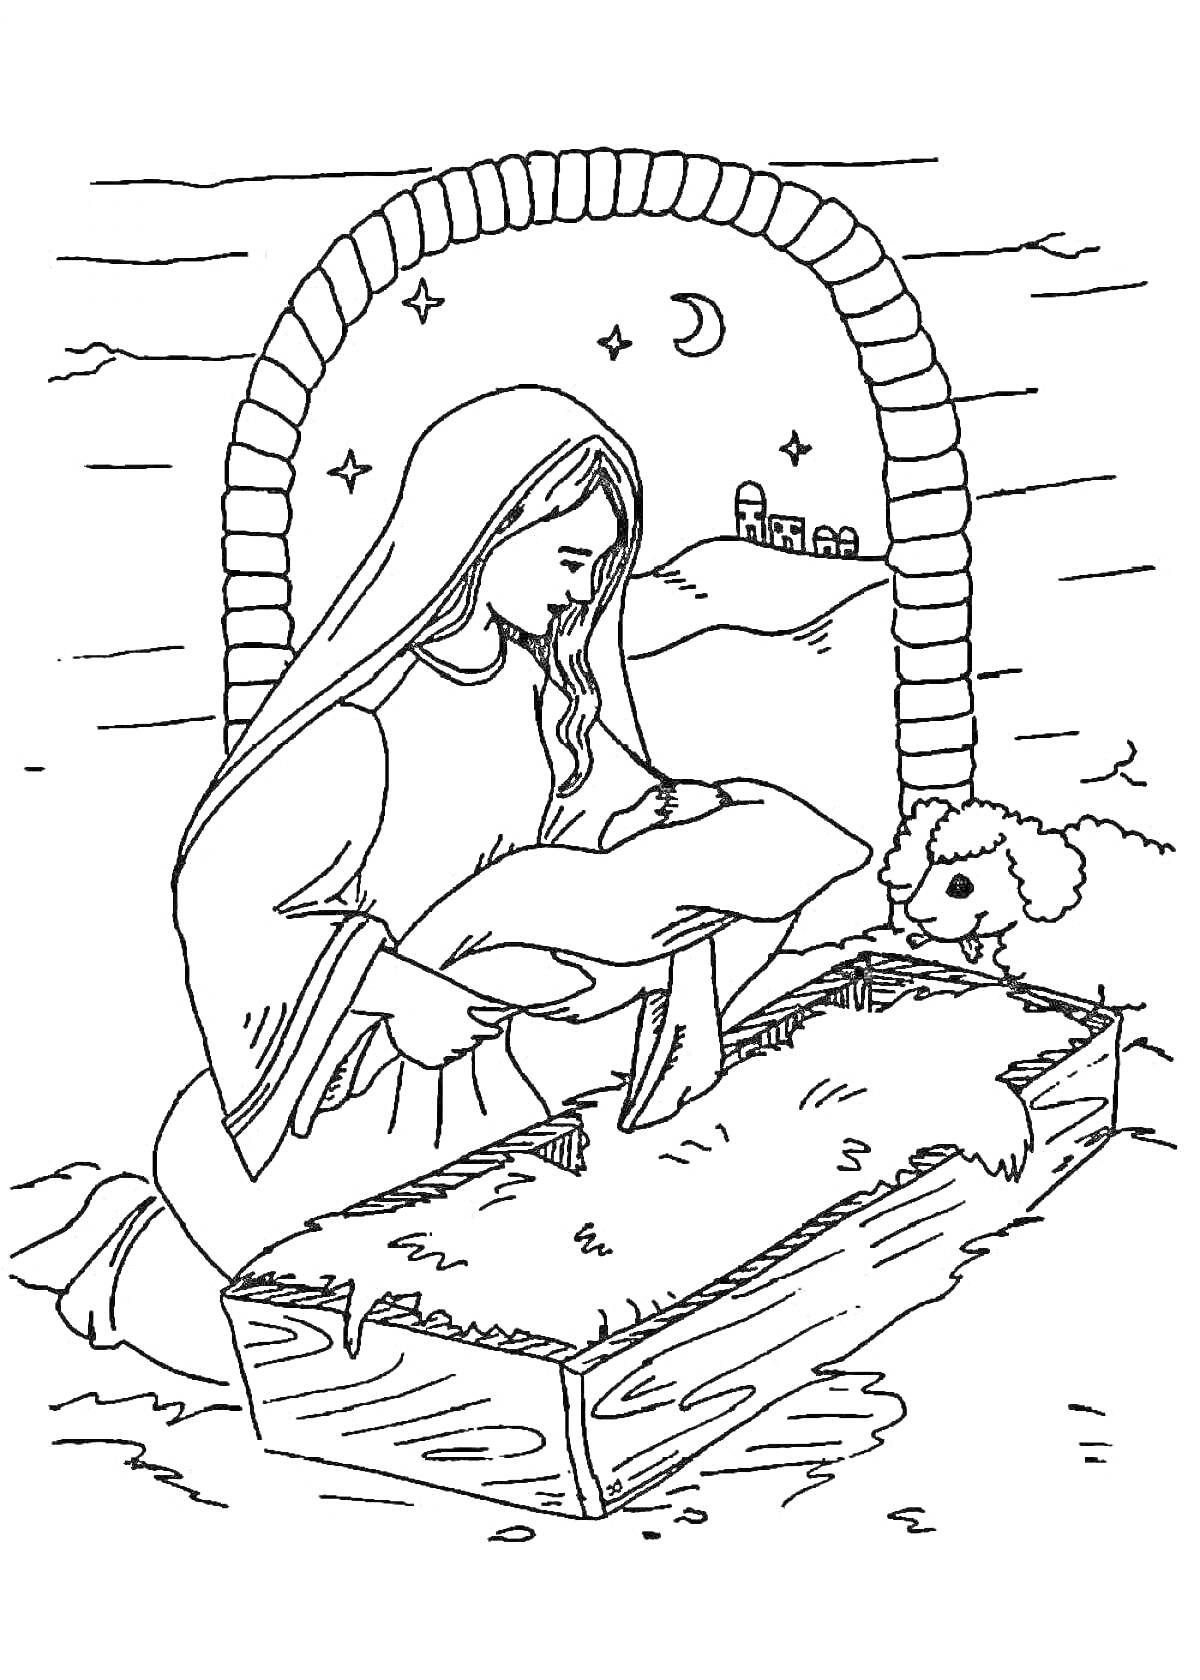 На раскраске изображено: Рождество, Иисус, Младенец, Ясли, Собака, Звезды, Луна, Арка, Пейзаж, Небо